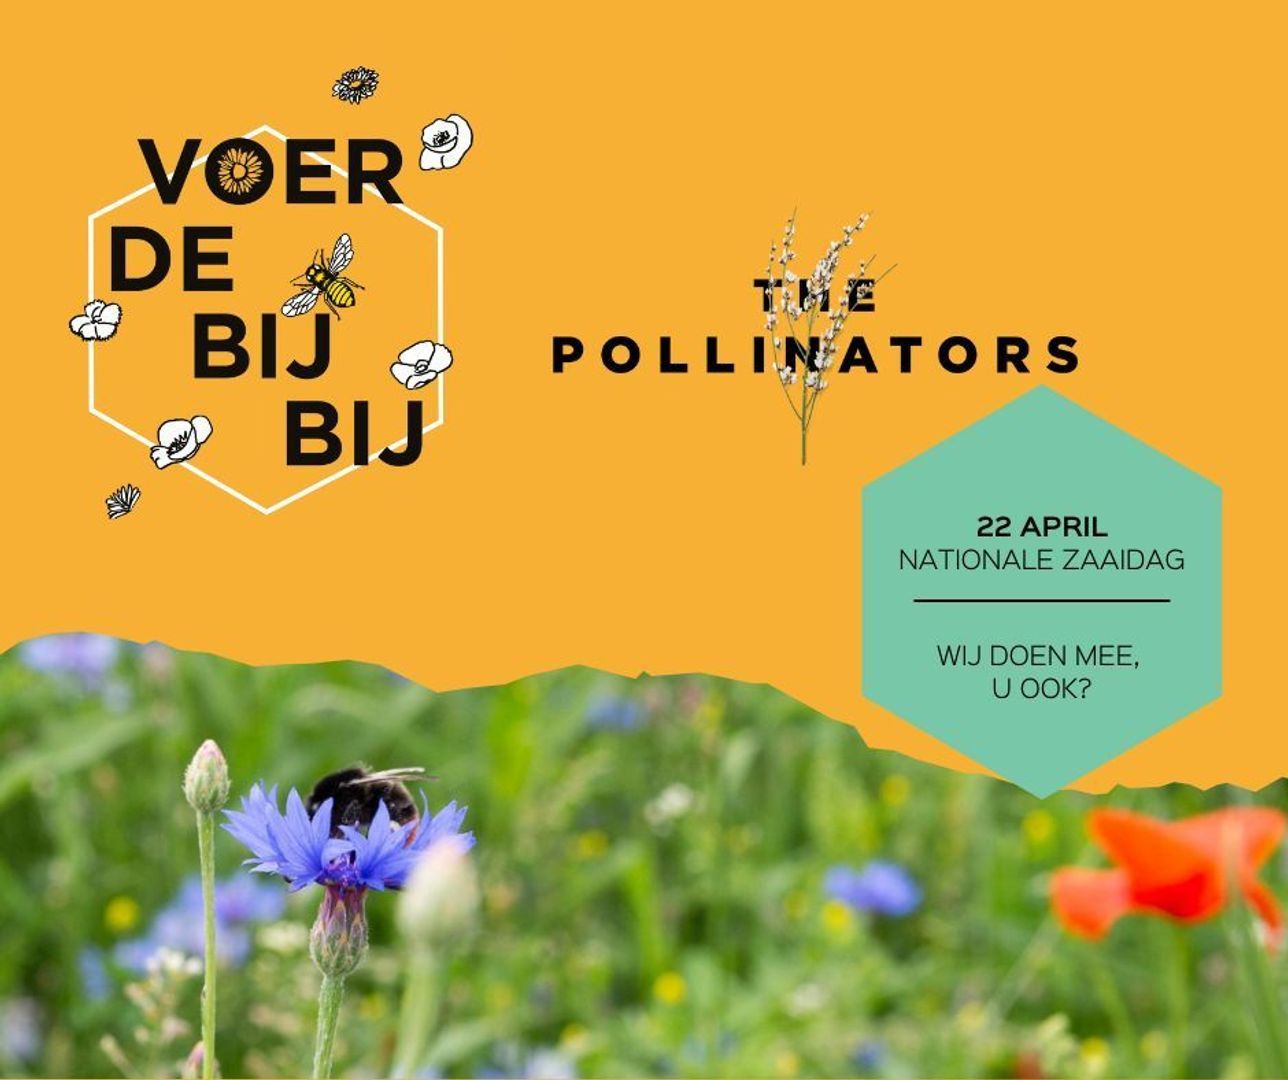 The Pollinators image